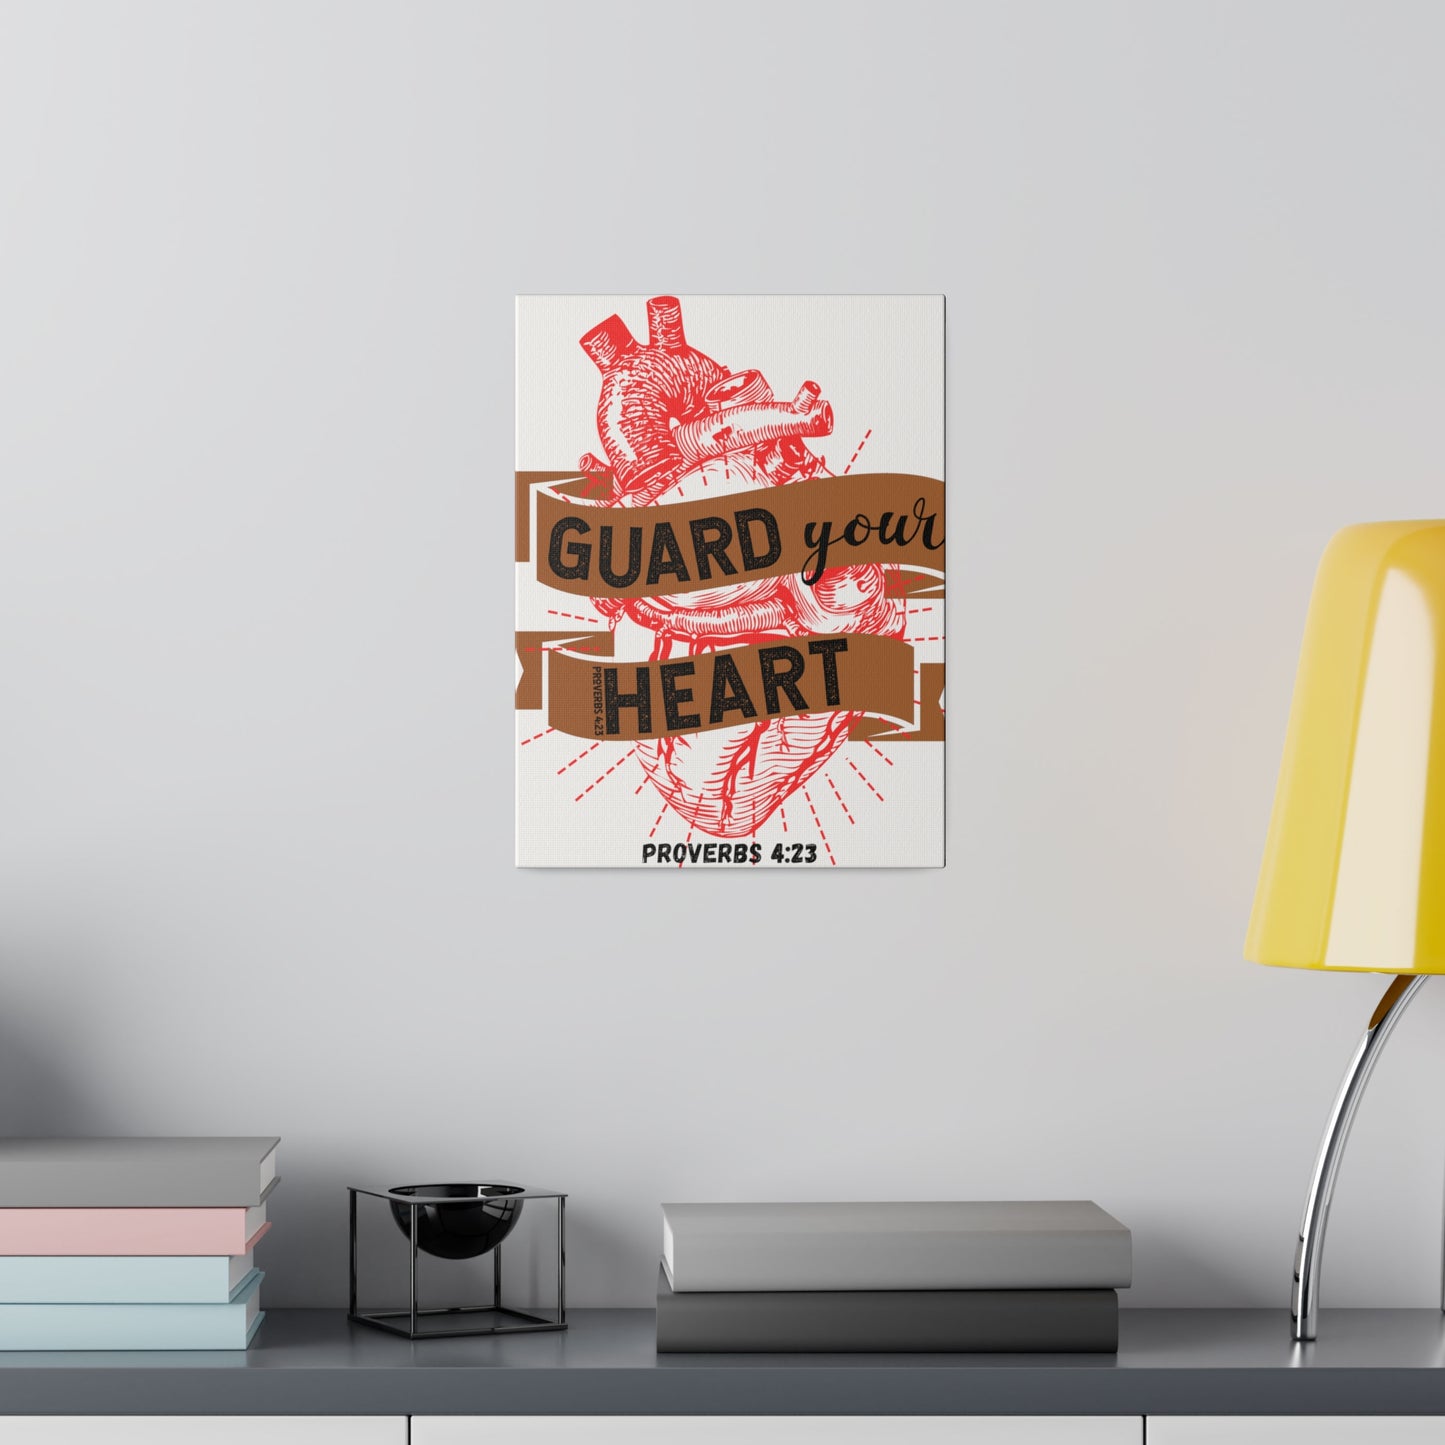 Heart Scripted Canvas Wall Art: Christian HomeDecor for Self Love Awareness